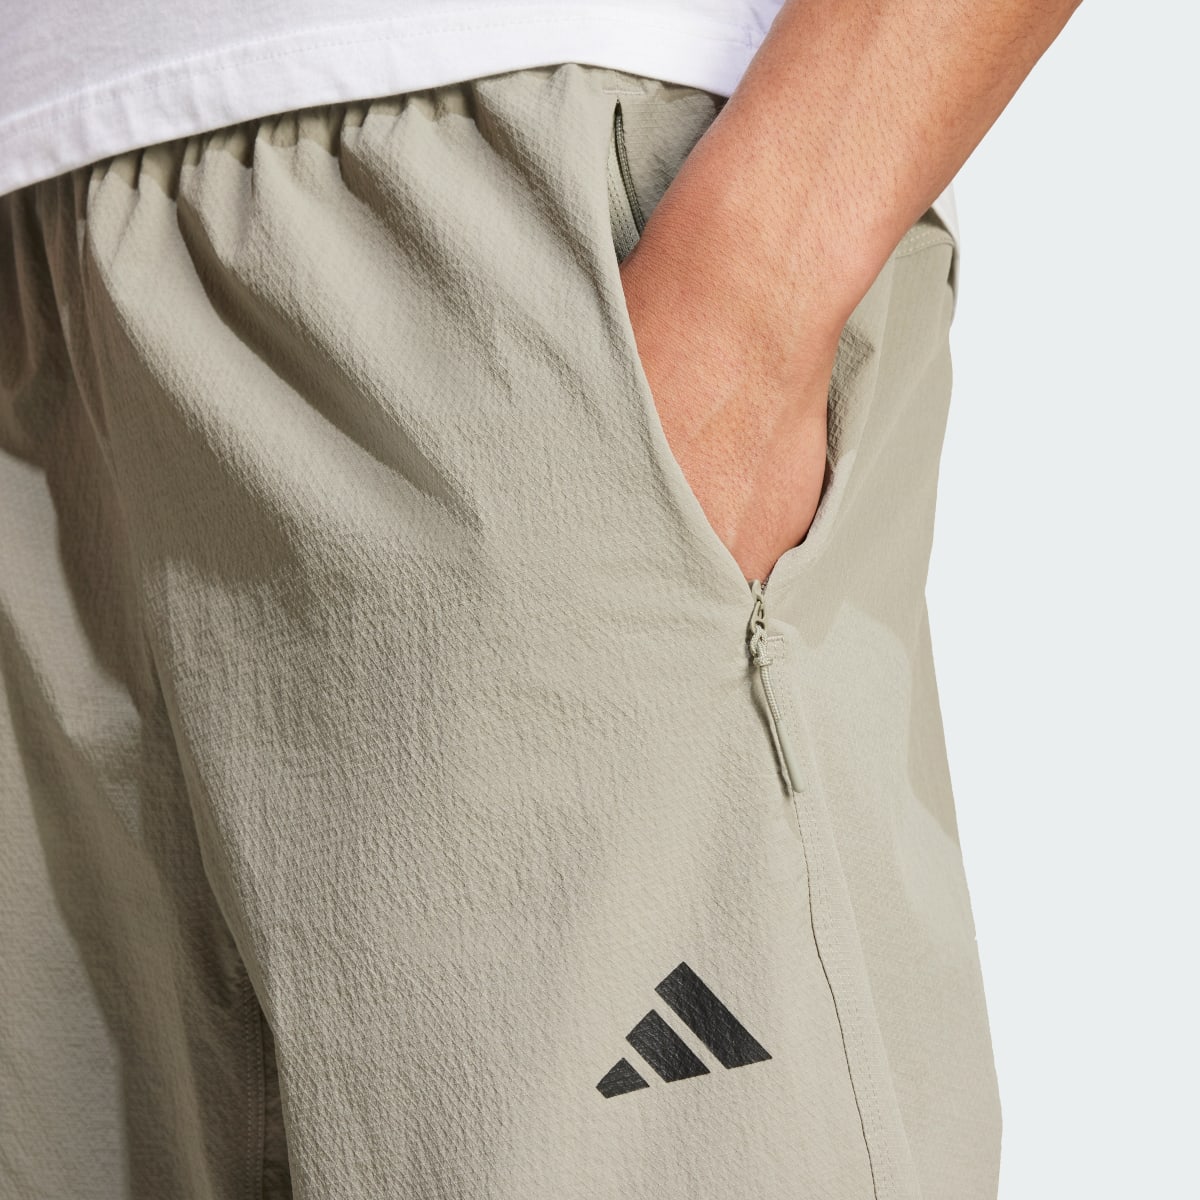 Adidas Spodnie Designed for Training Adistrong Workout. 7